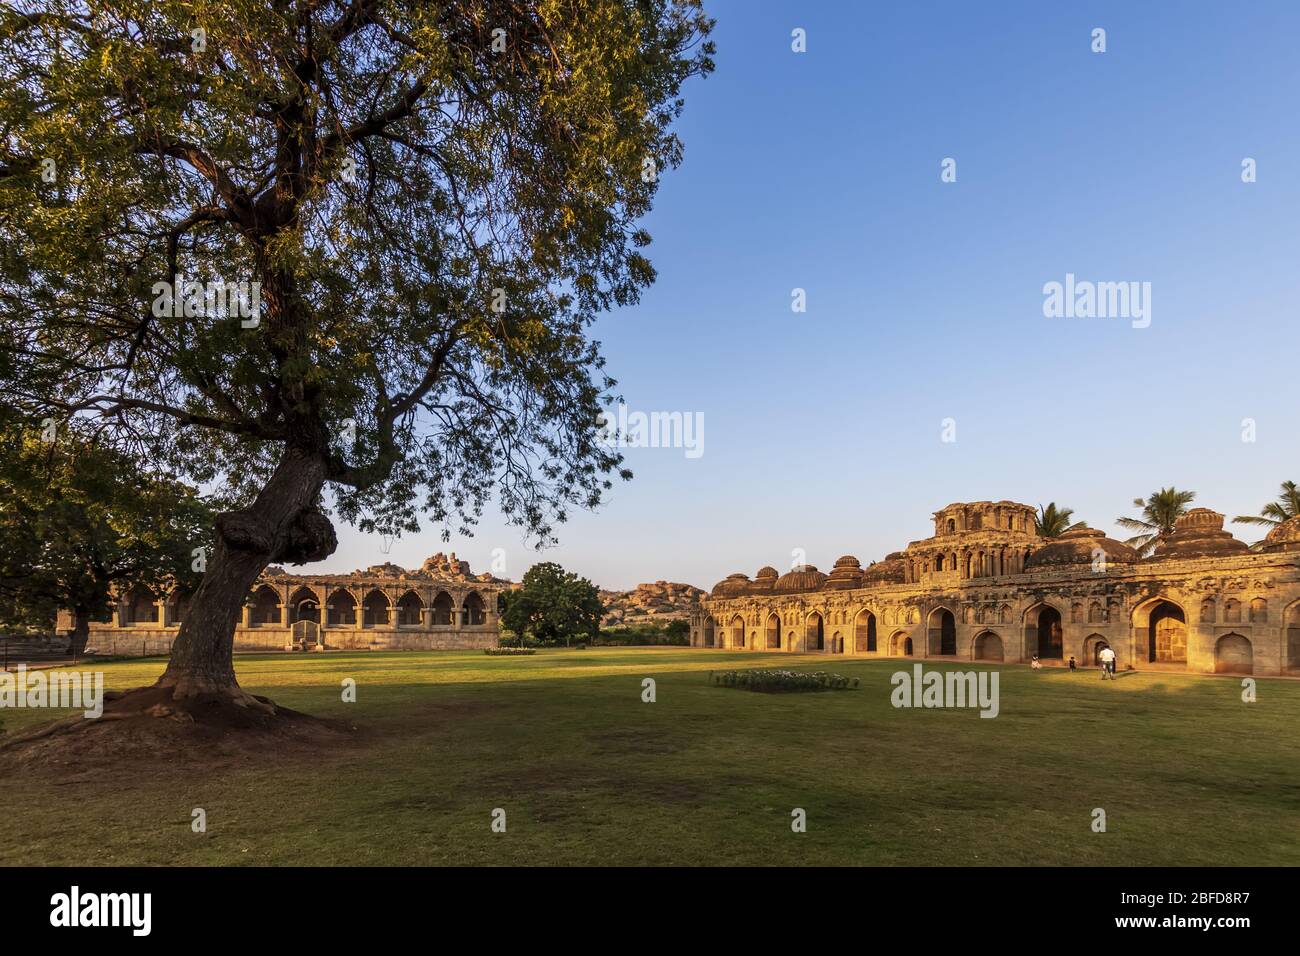 Ancient civilization in Hampi. India, State Karnataka. Old Hindu temples and ruins. Tree on foreground. Stock Photo